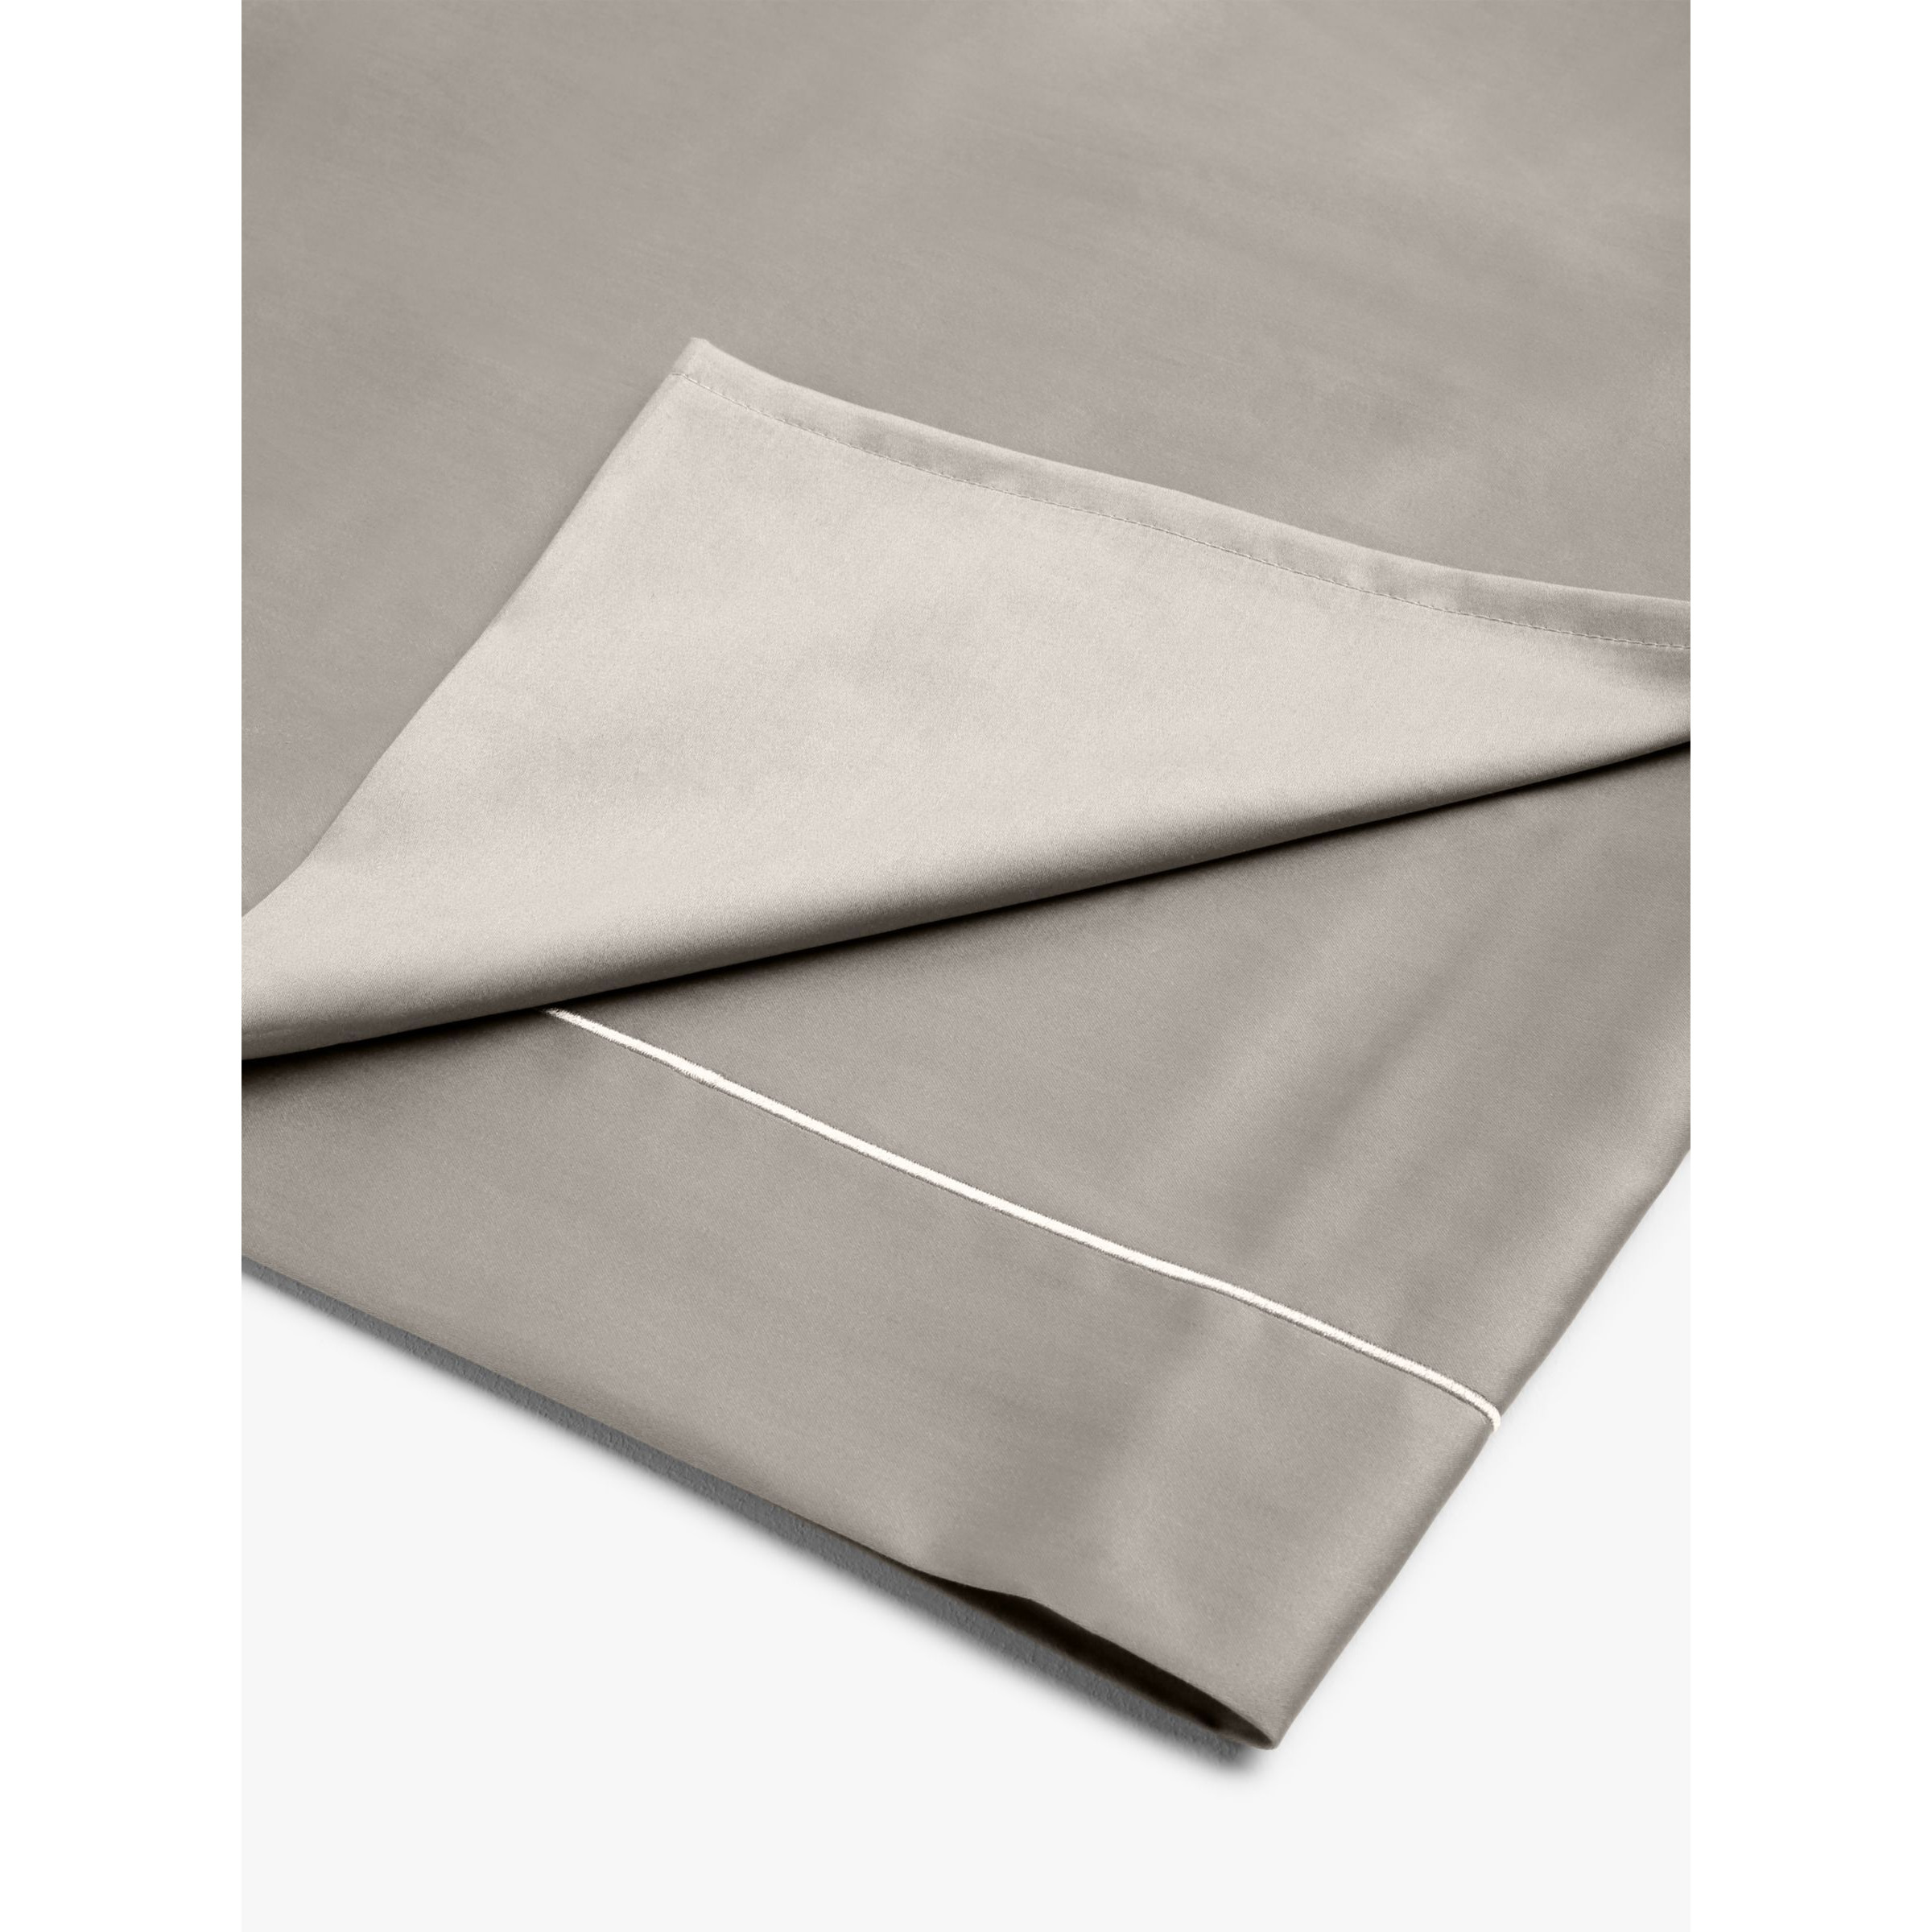 John Lewis & Partners 400 Thread Count Soft & Silky Egyptian Cotton Flat Sheet